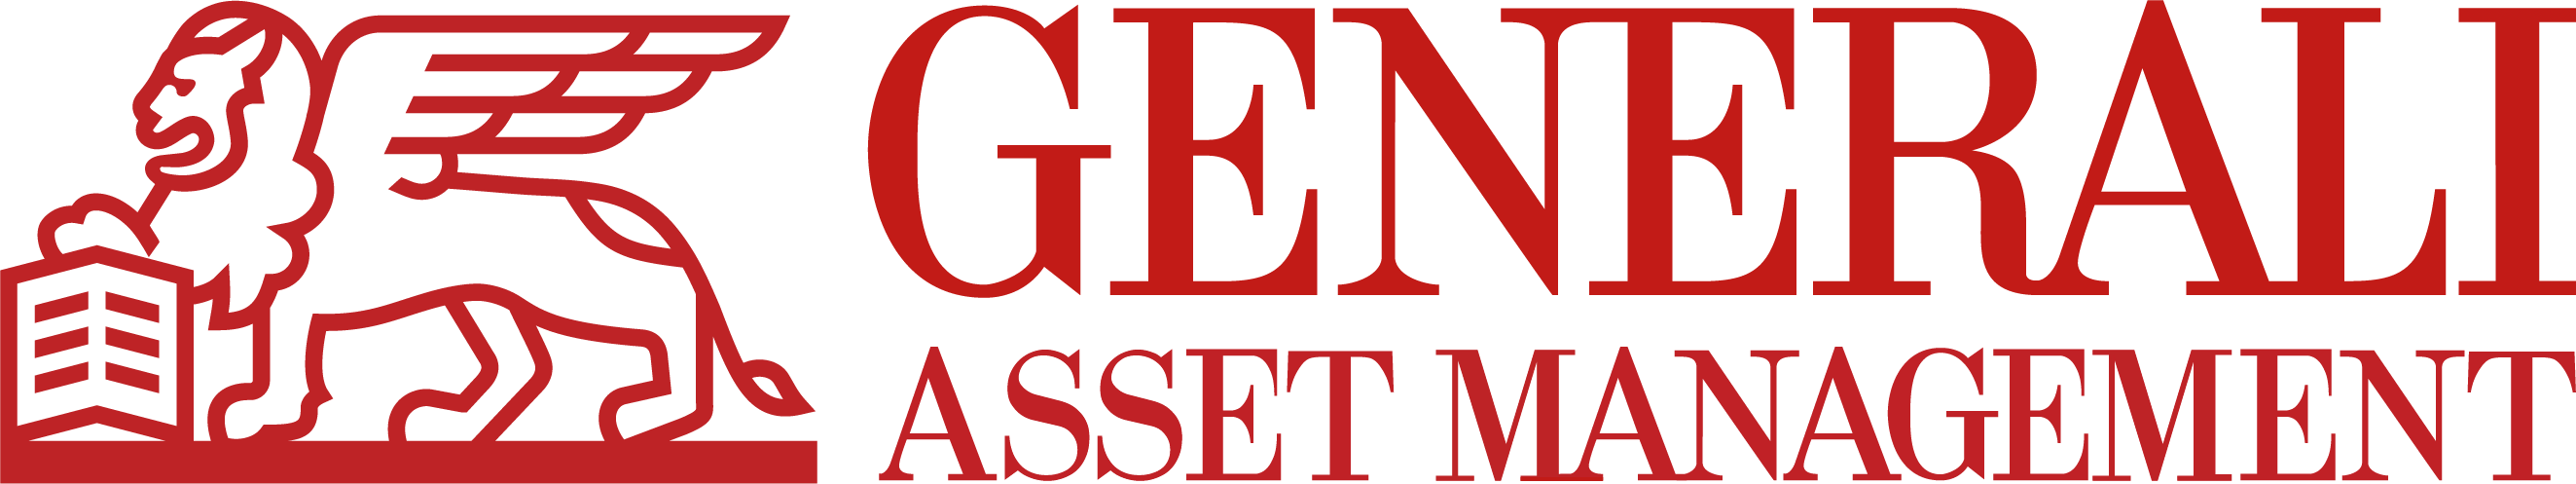 Generali Investments Partners logo